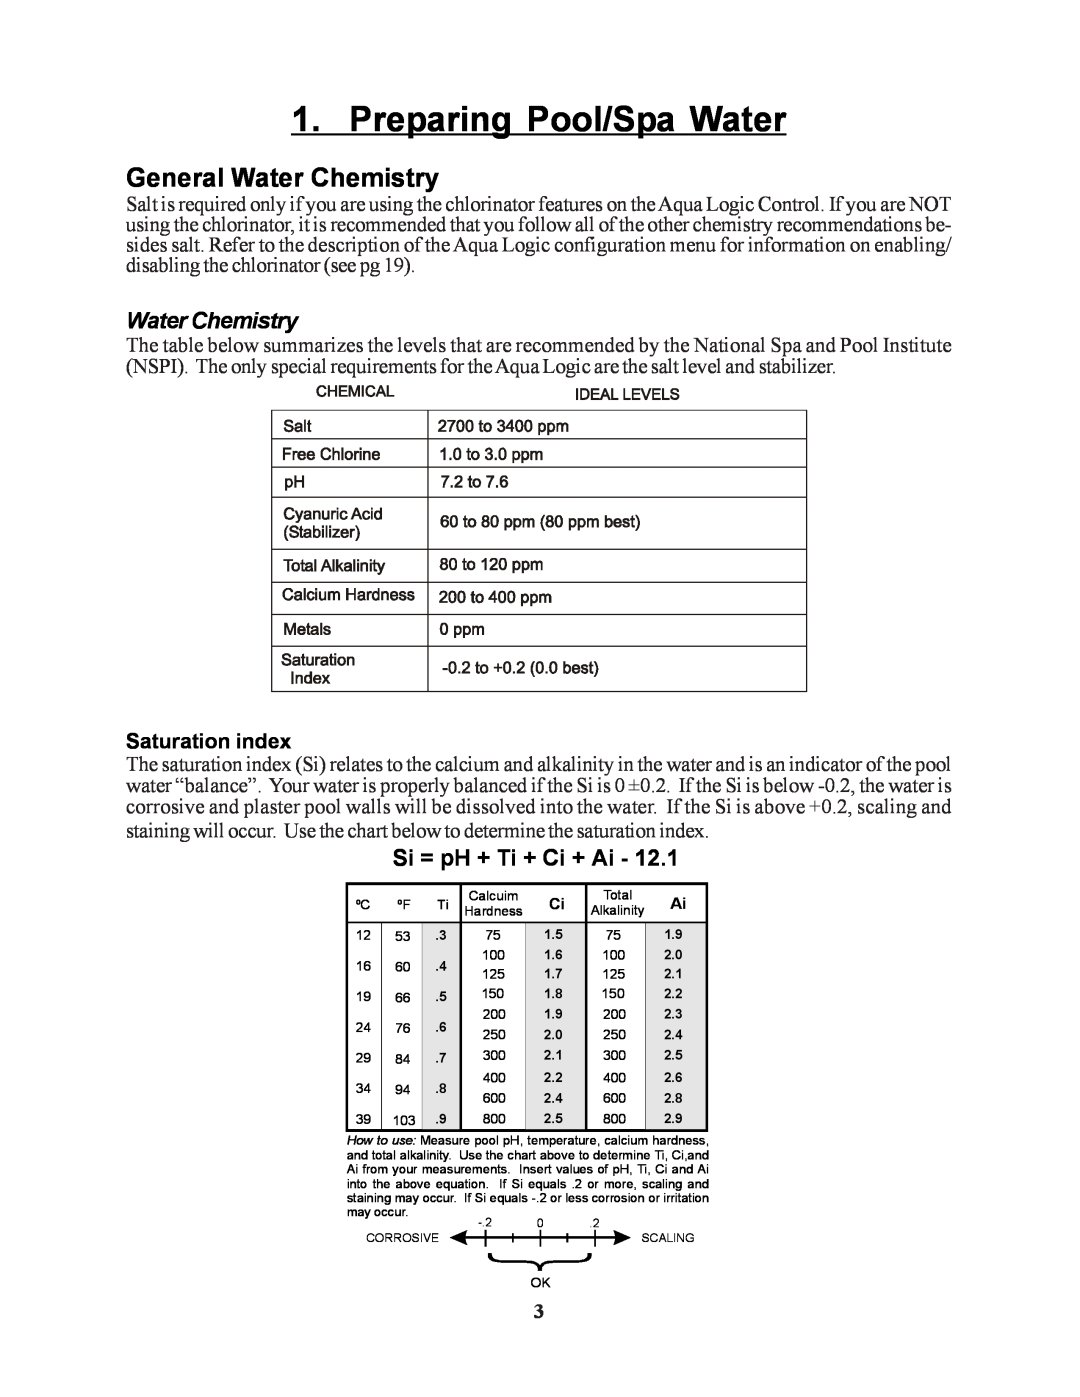 Raypak PS-4 PS-8 Preparing Pool/Spa Water, General Water Chemistry, Si = pH + Ti + Ci + Ai, Saturation index 